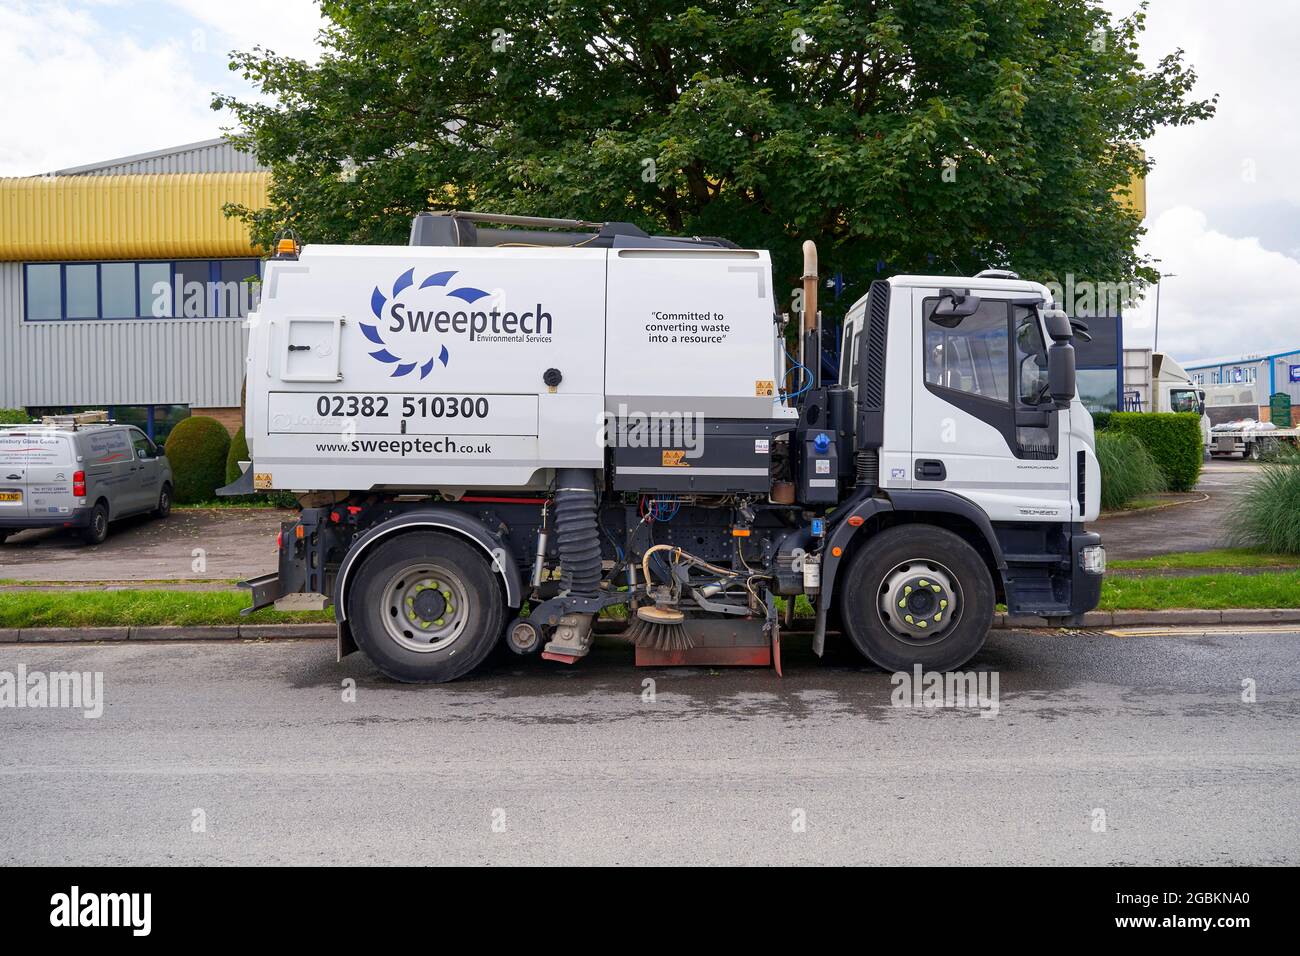 Máquina de limpieza de calle Sweeptech Foto de stock